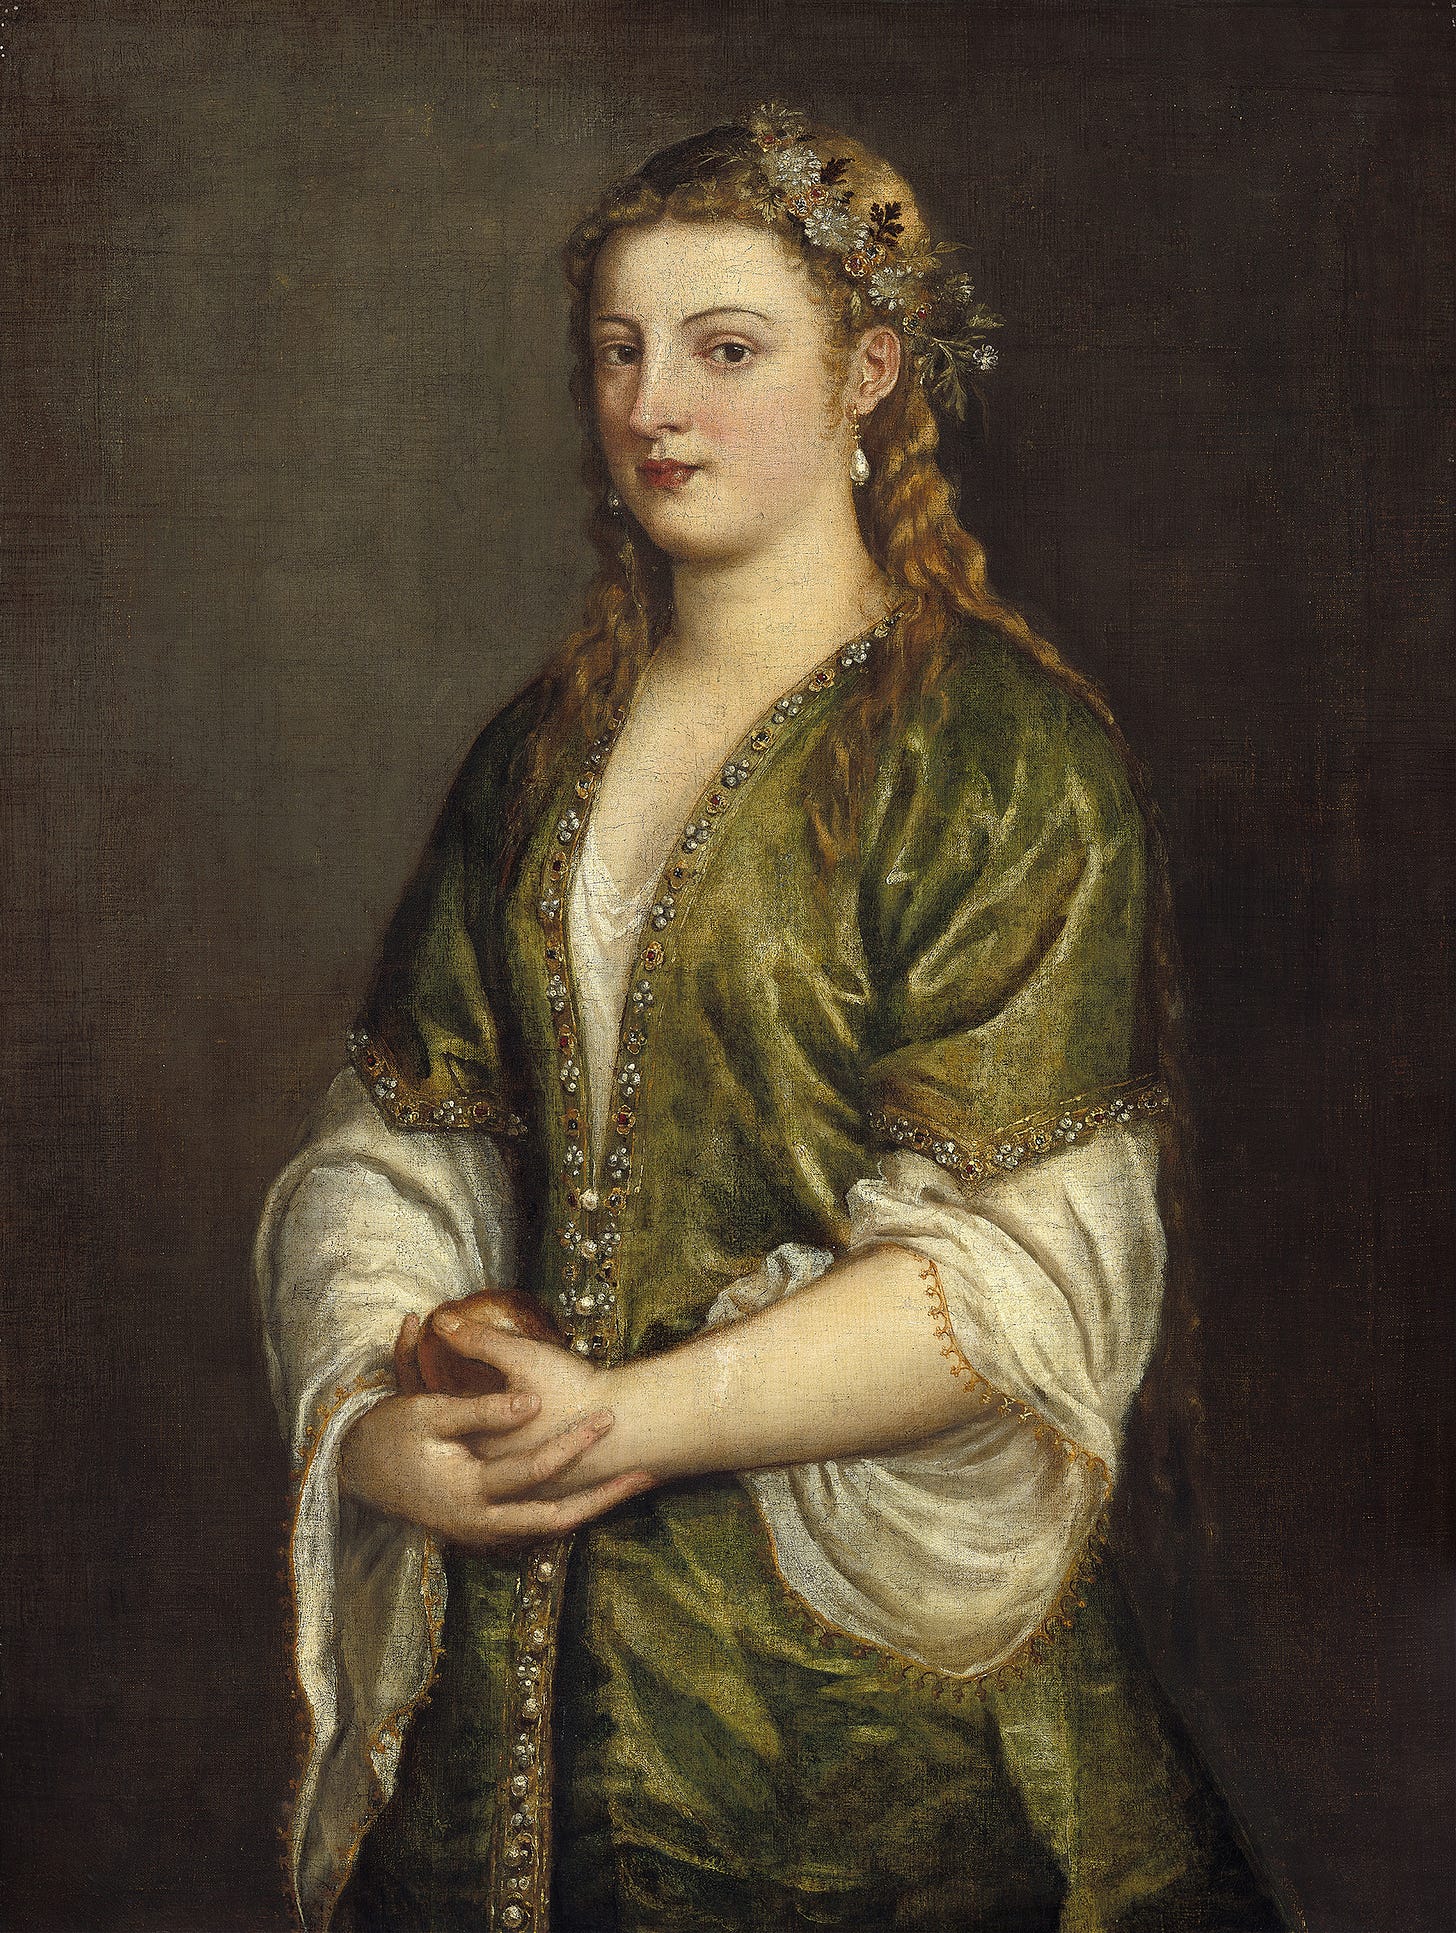 Woman Holding an Apple (c. 1550)